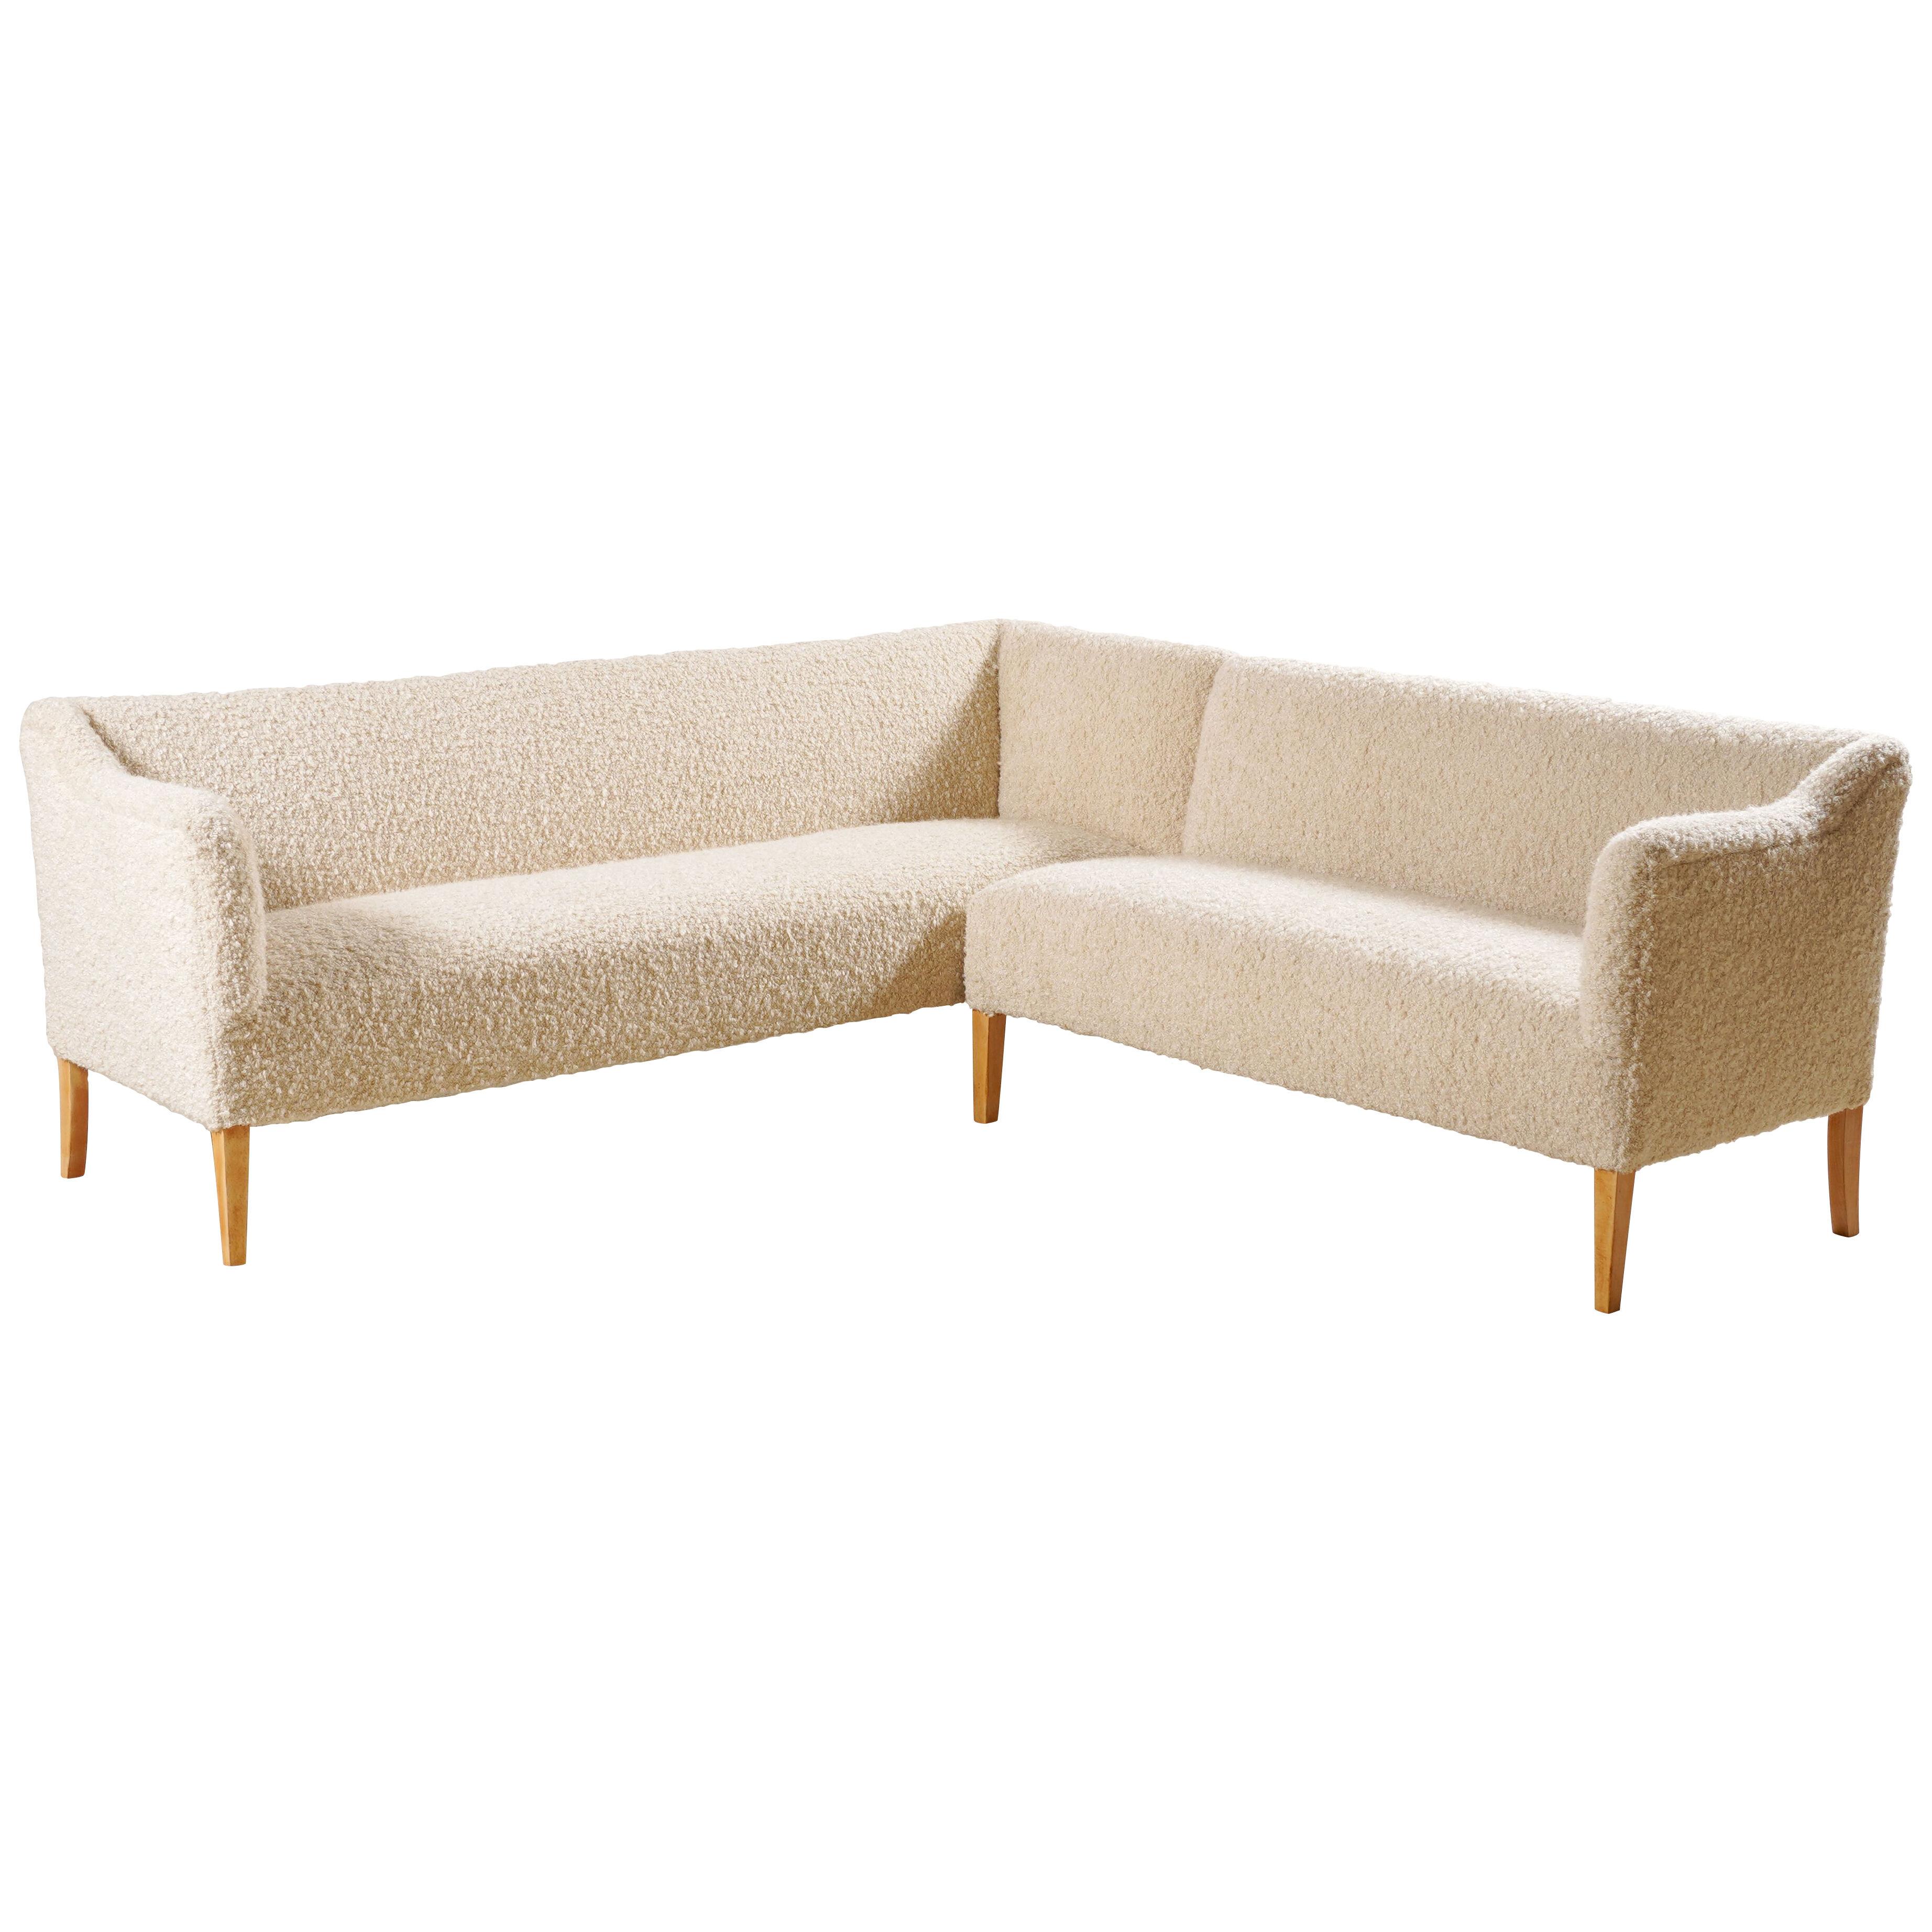 Danish Corner Sofa, Original Piece from the 1950s Newly Upholstered